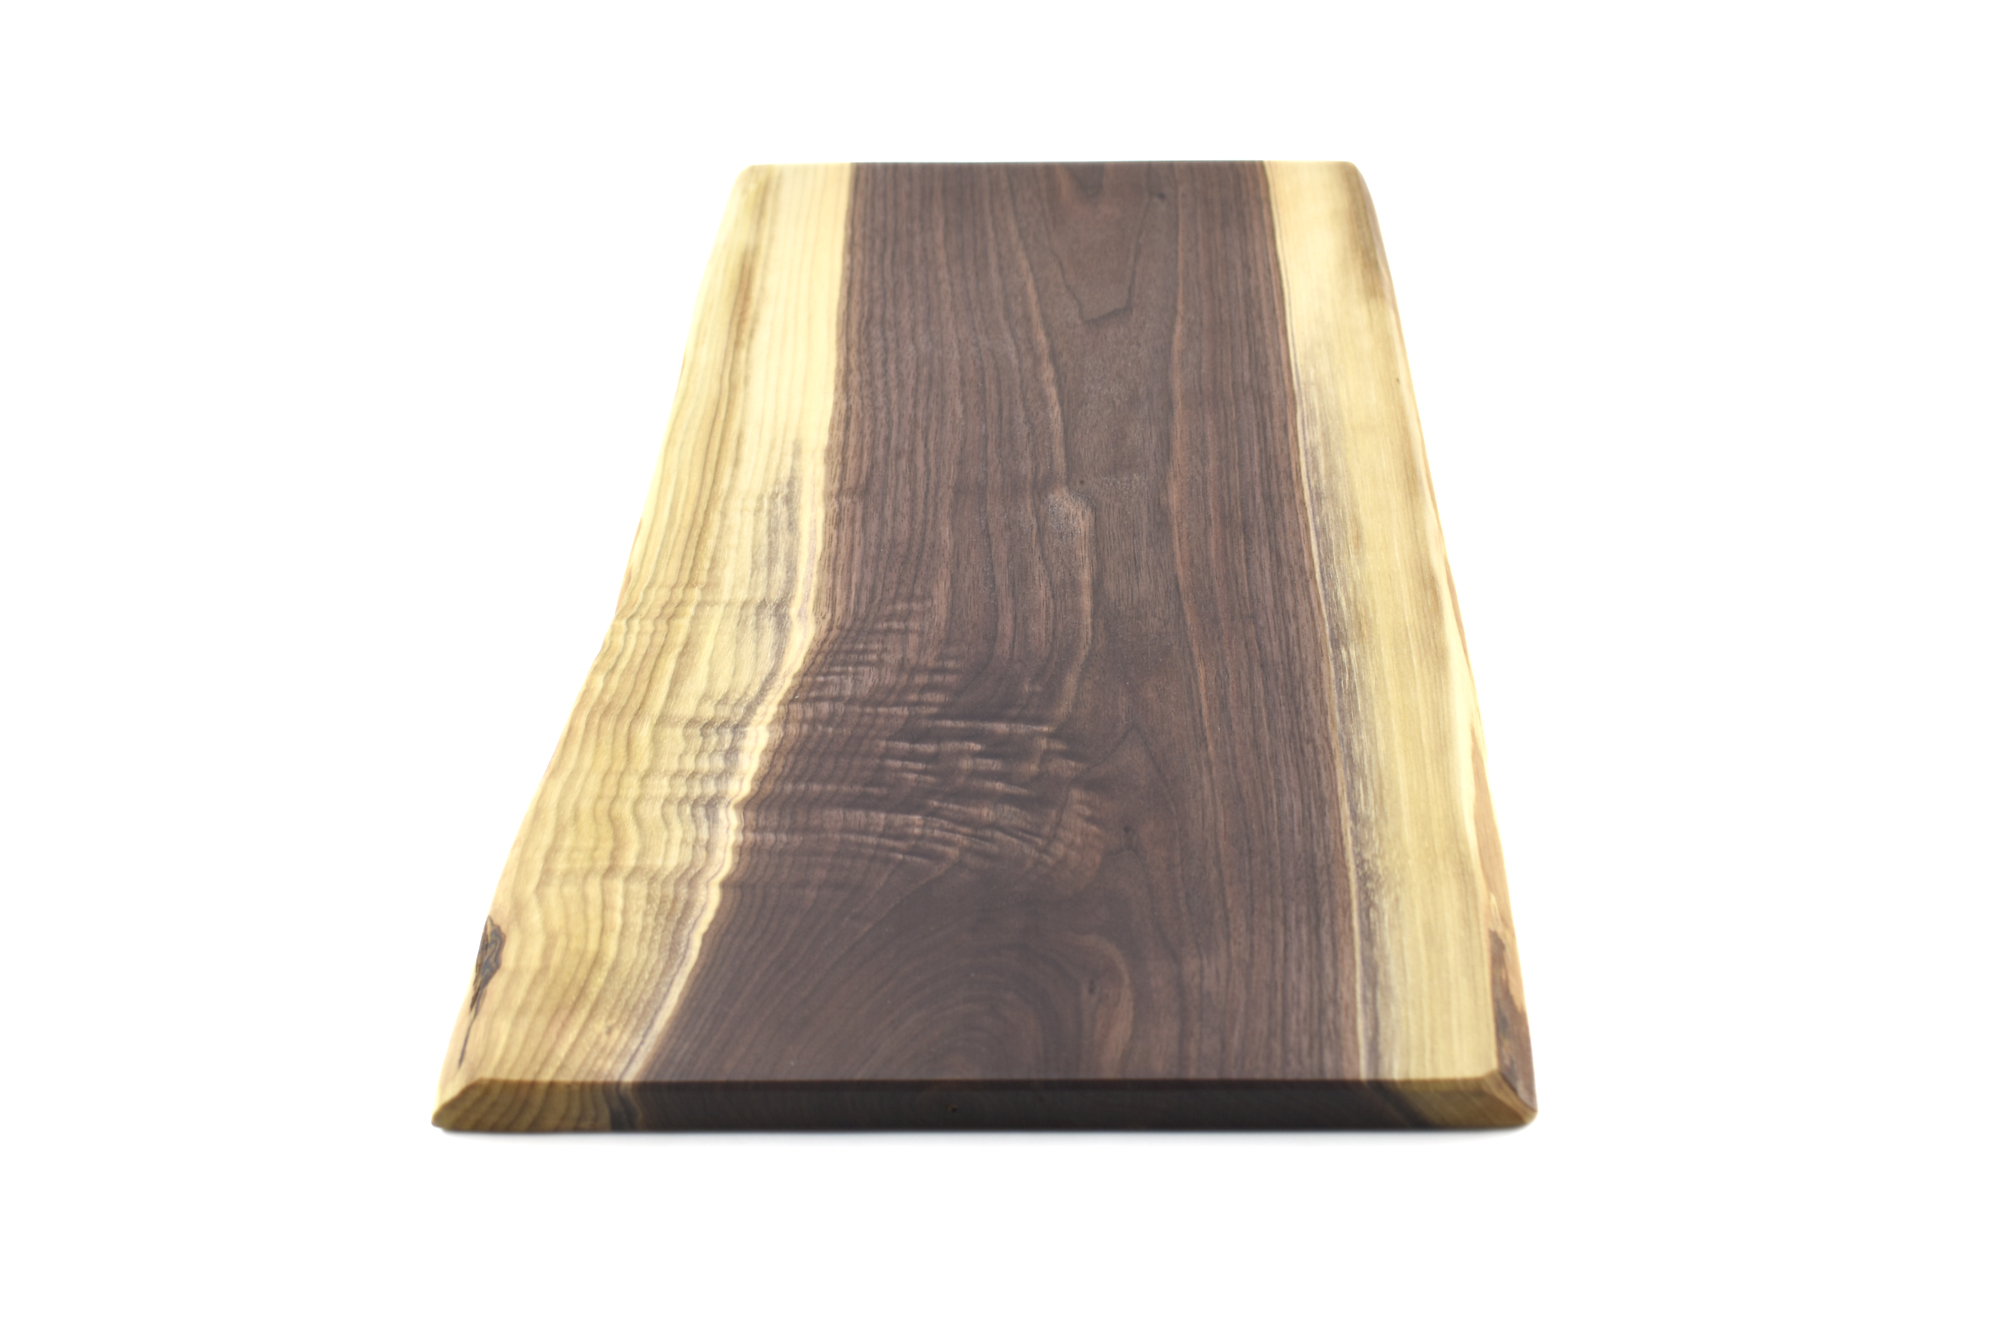 Medium live edge rectangular wood serving board